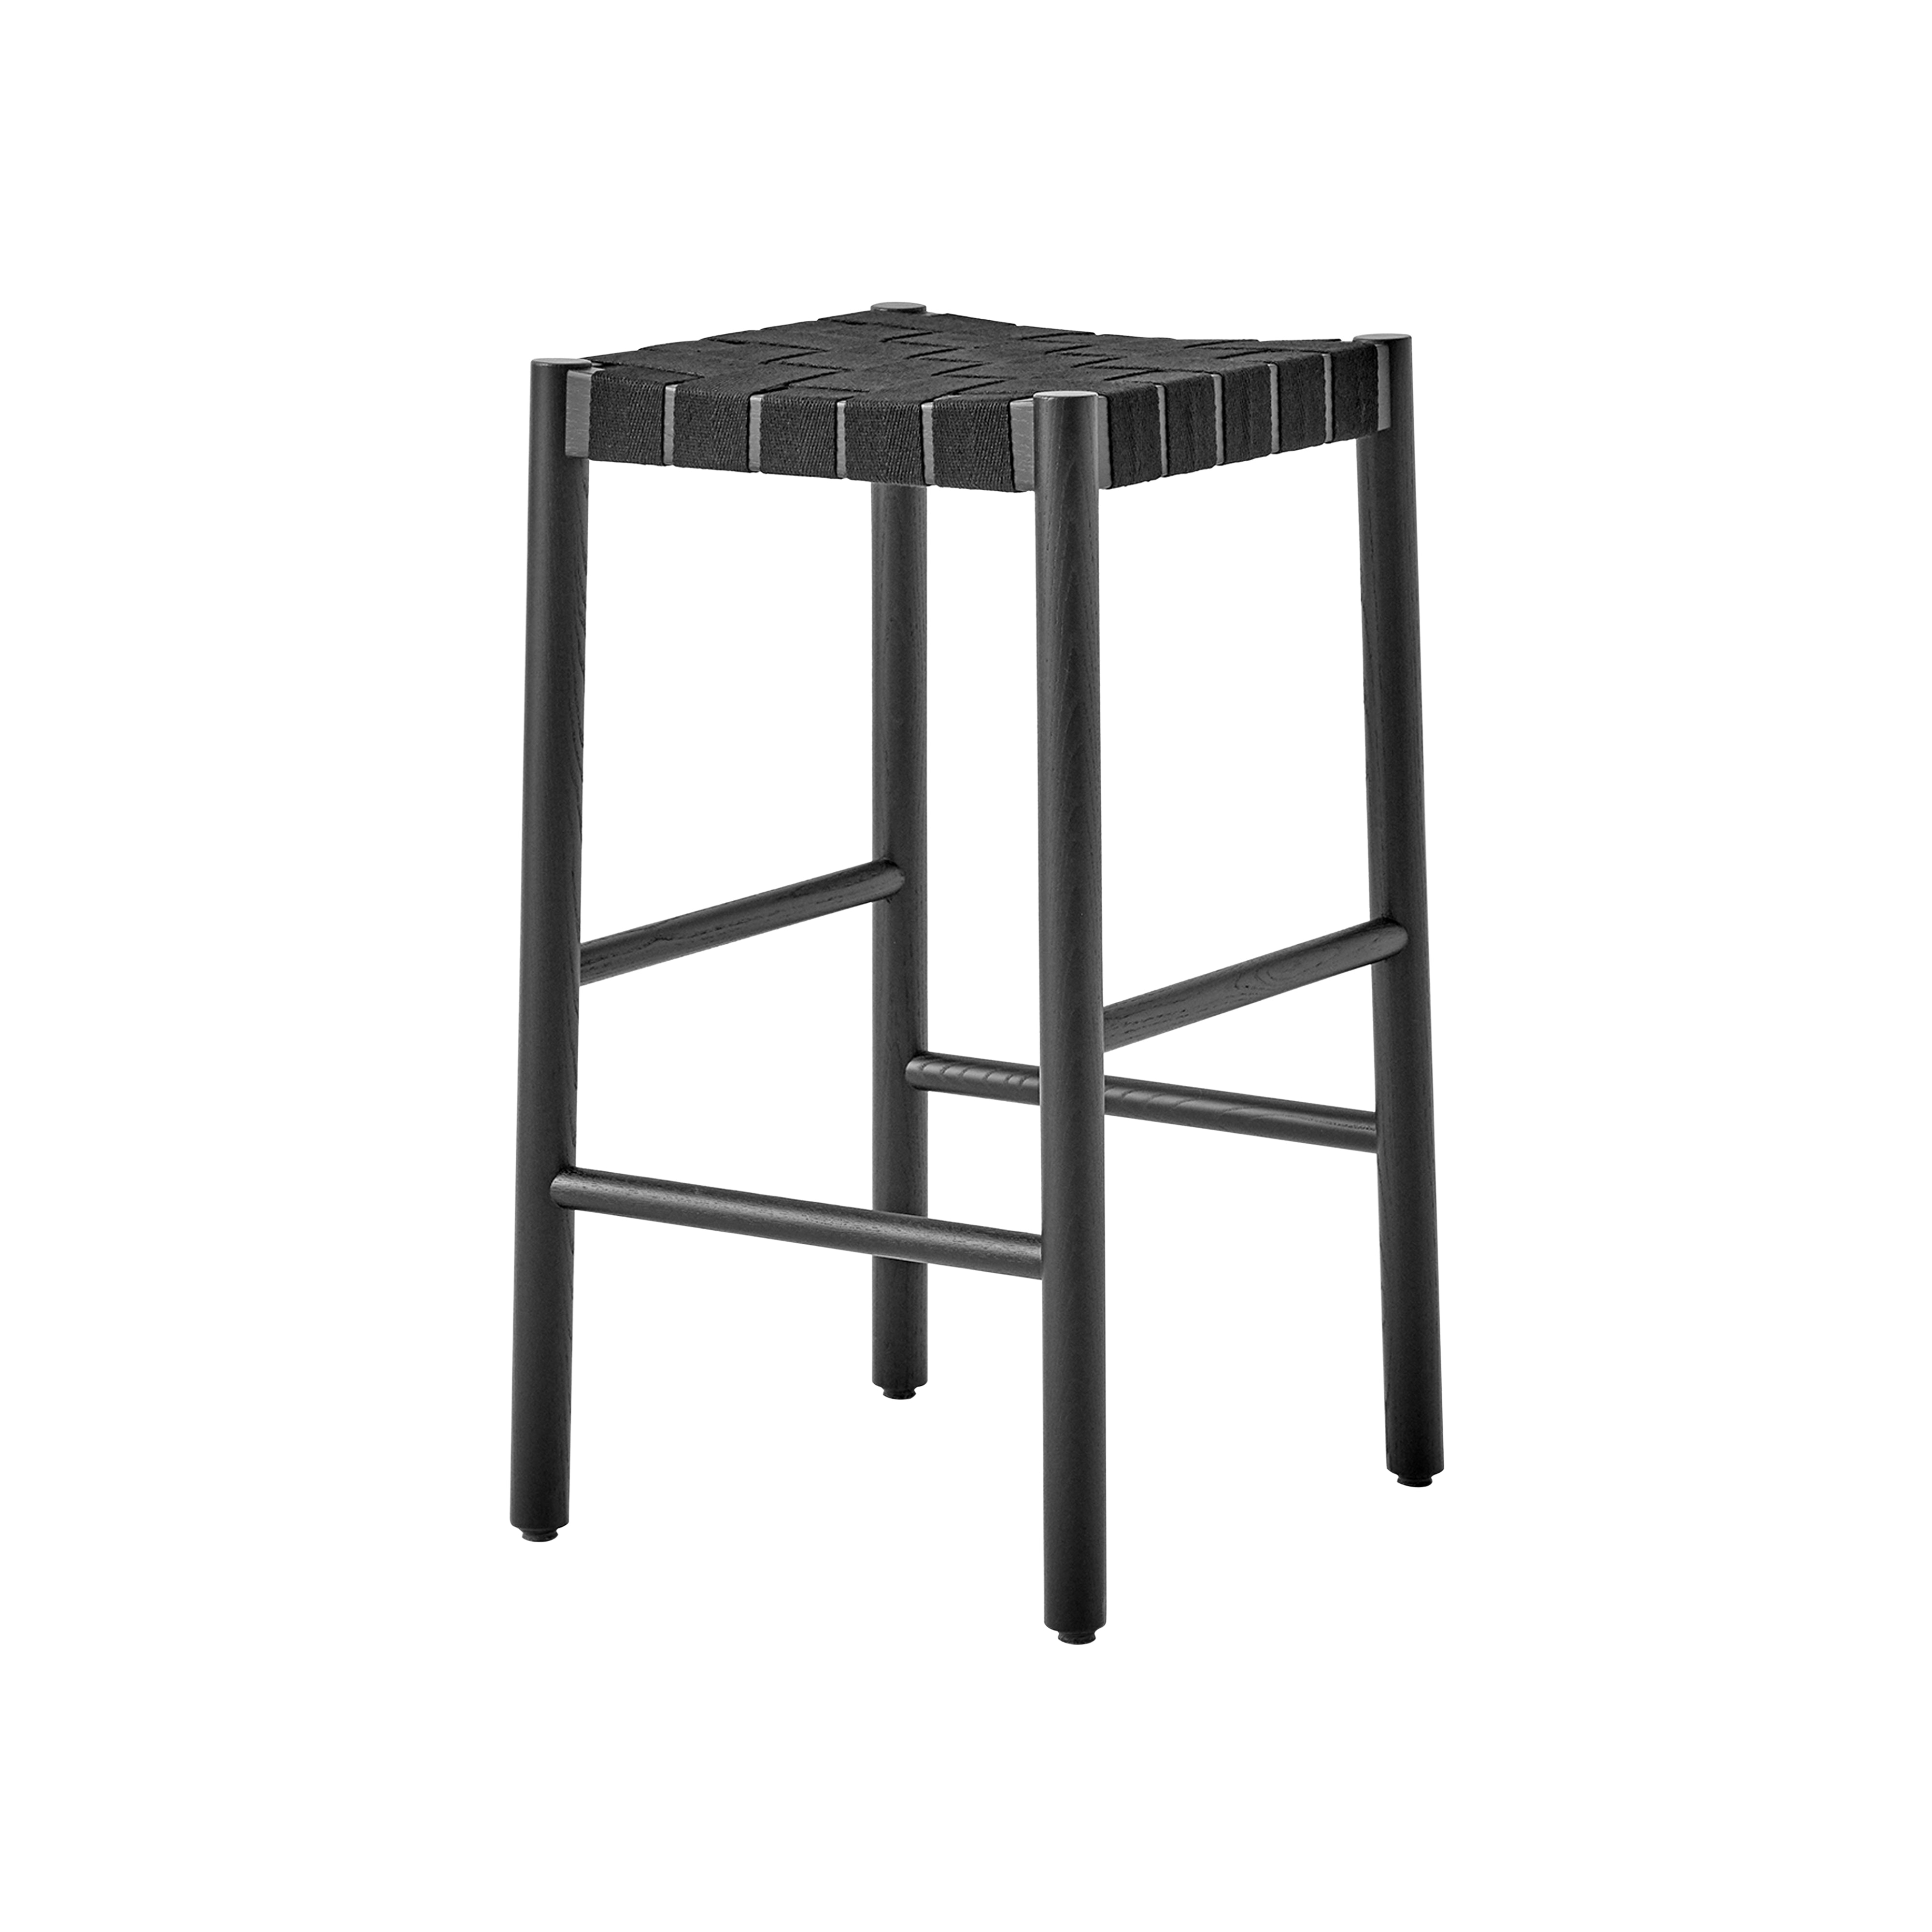 Betty Bar + Counter Chair: TK7 + TK8 + Counter (TK7) + Black + Black